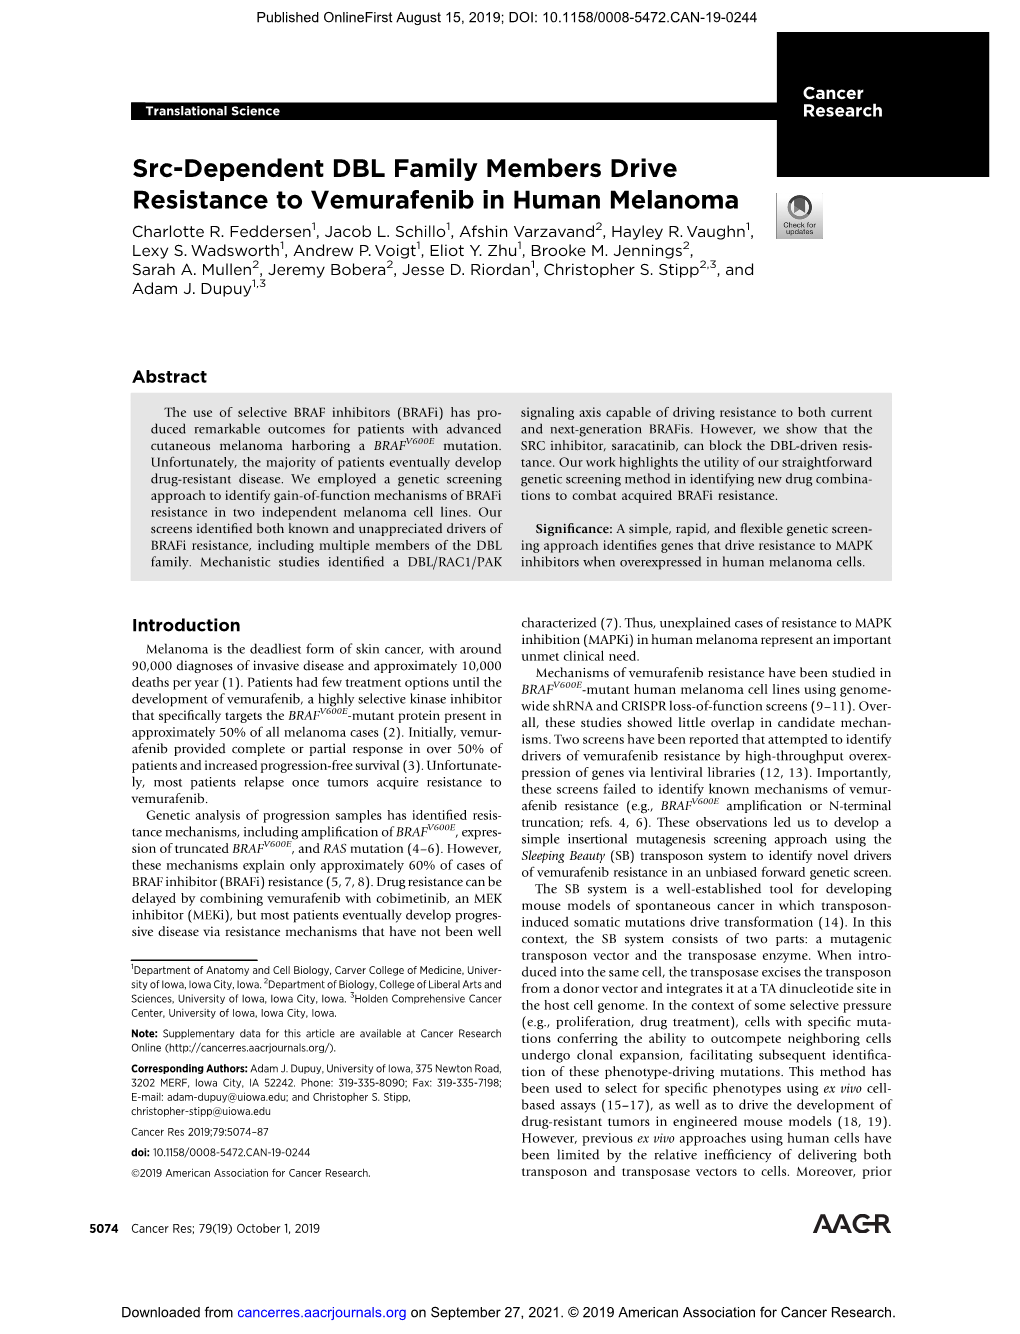 Src-Dependent DBL Family Members Drive Resistance to Vemurafenib in Human Melanoma Charlotte R